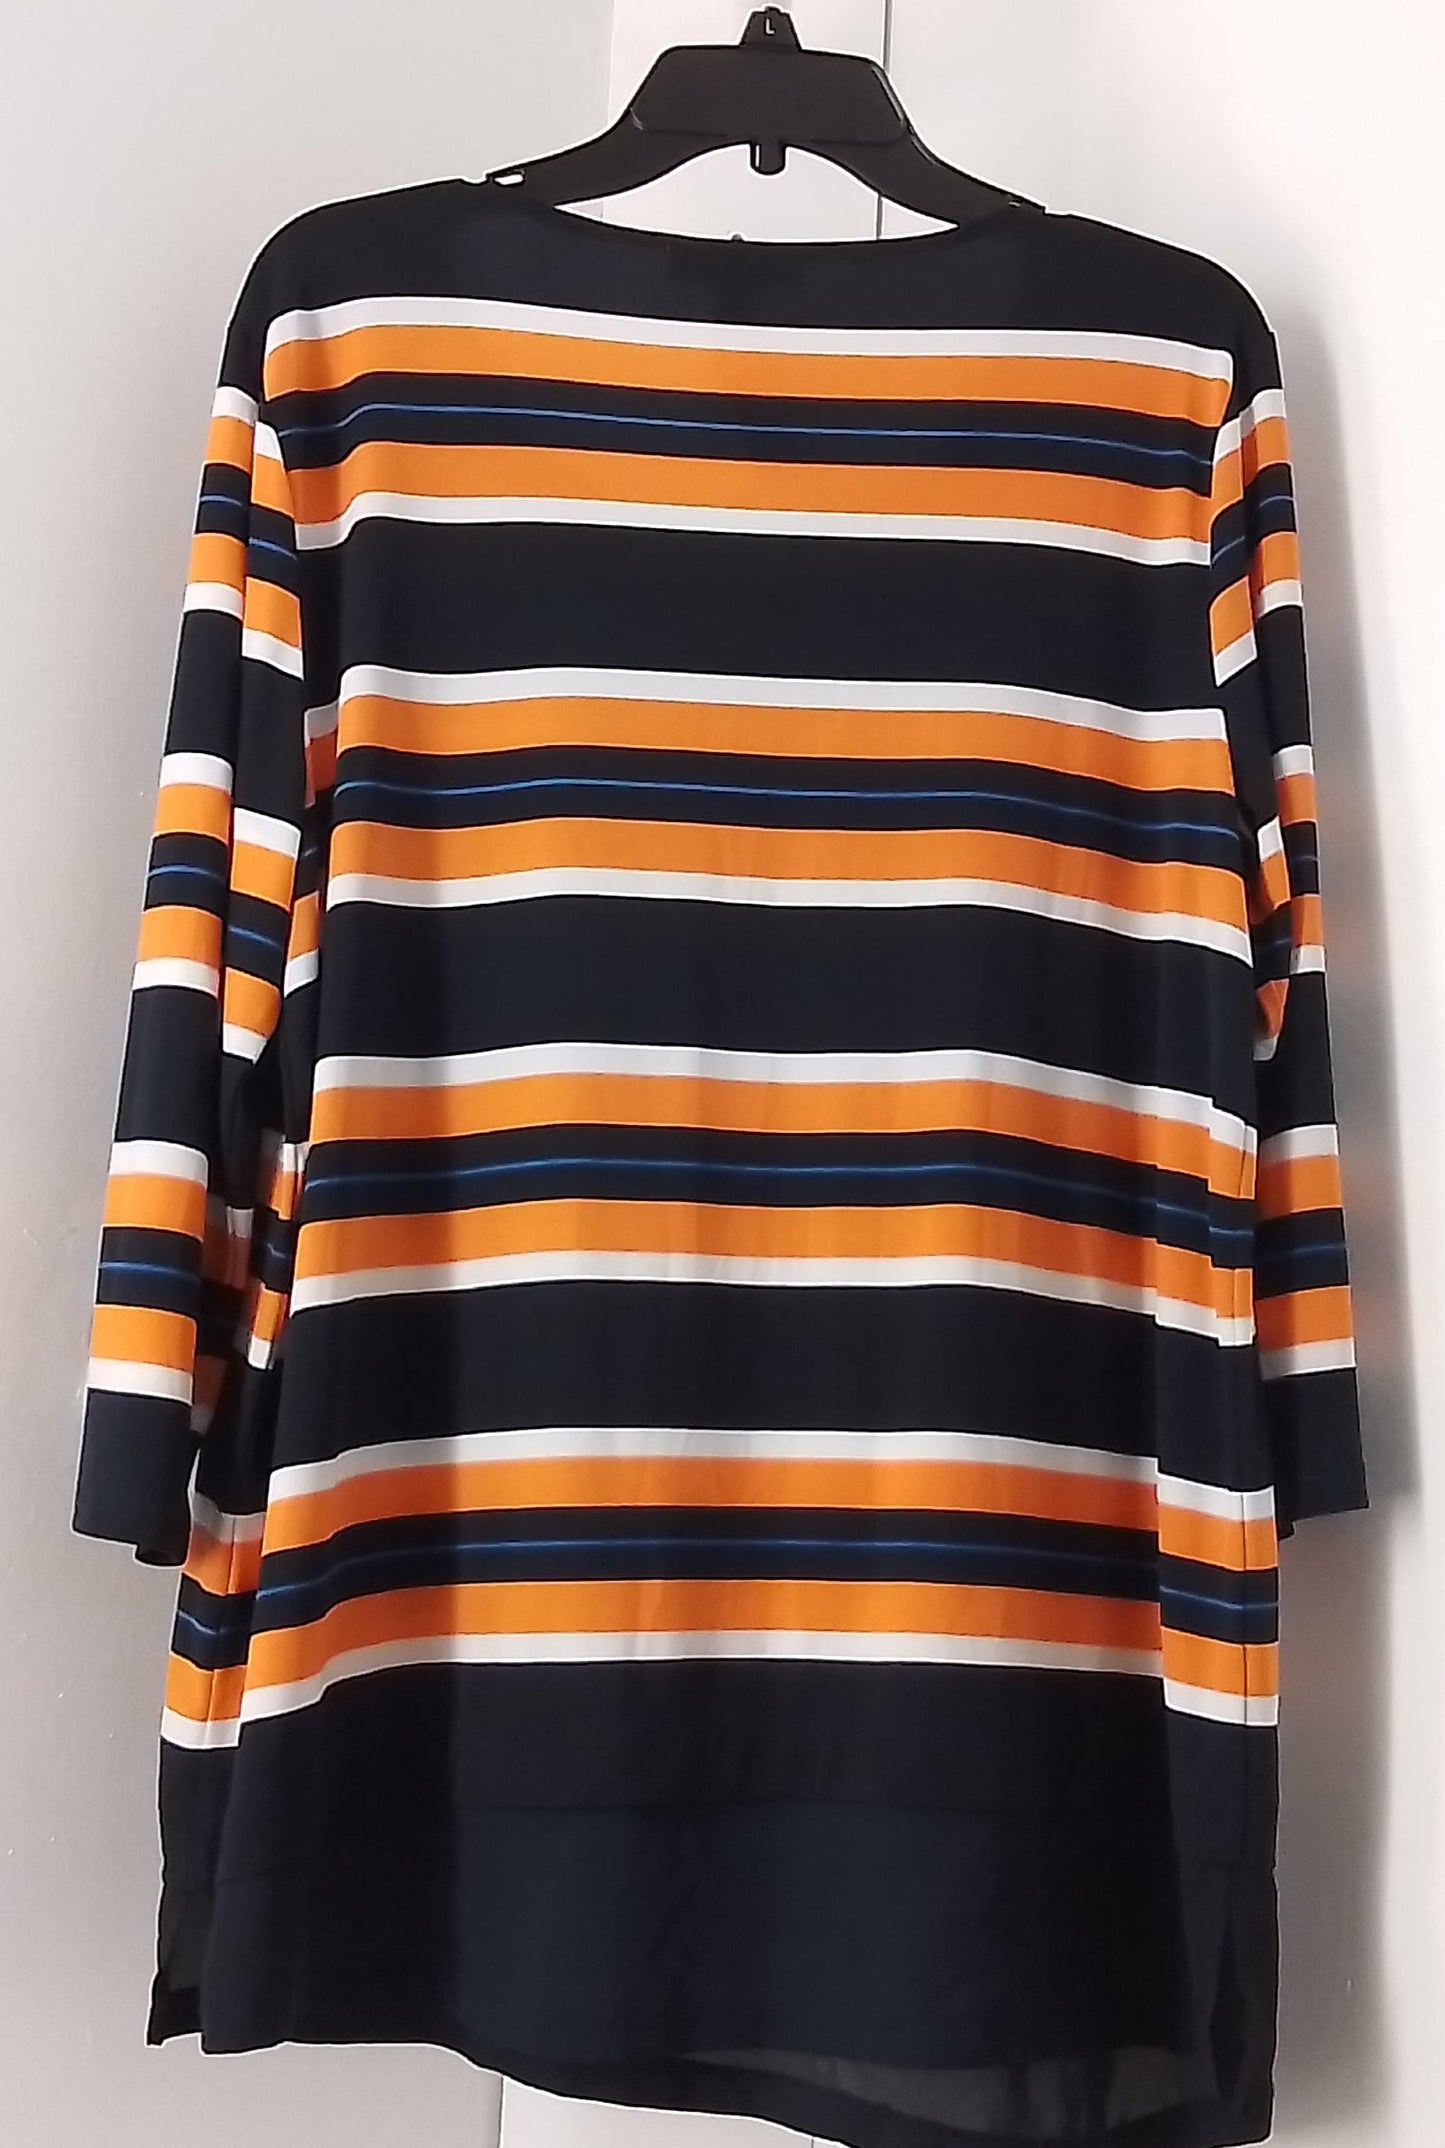 Chaus New York Women's Orange and Black Striped Shirt